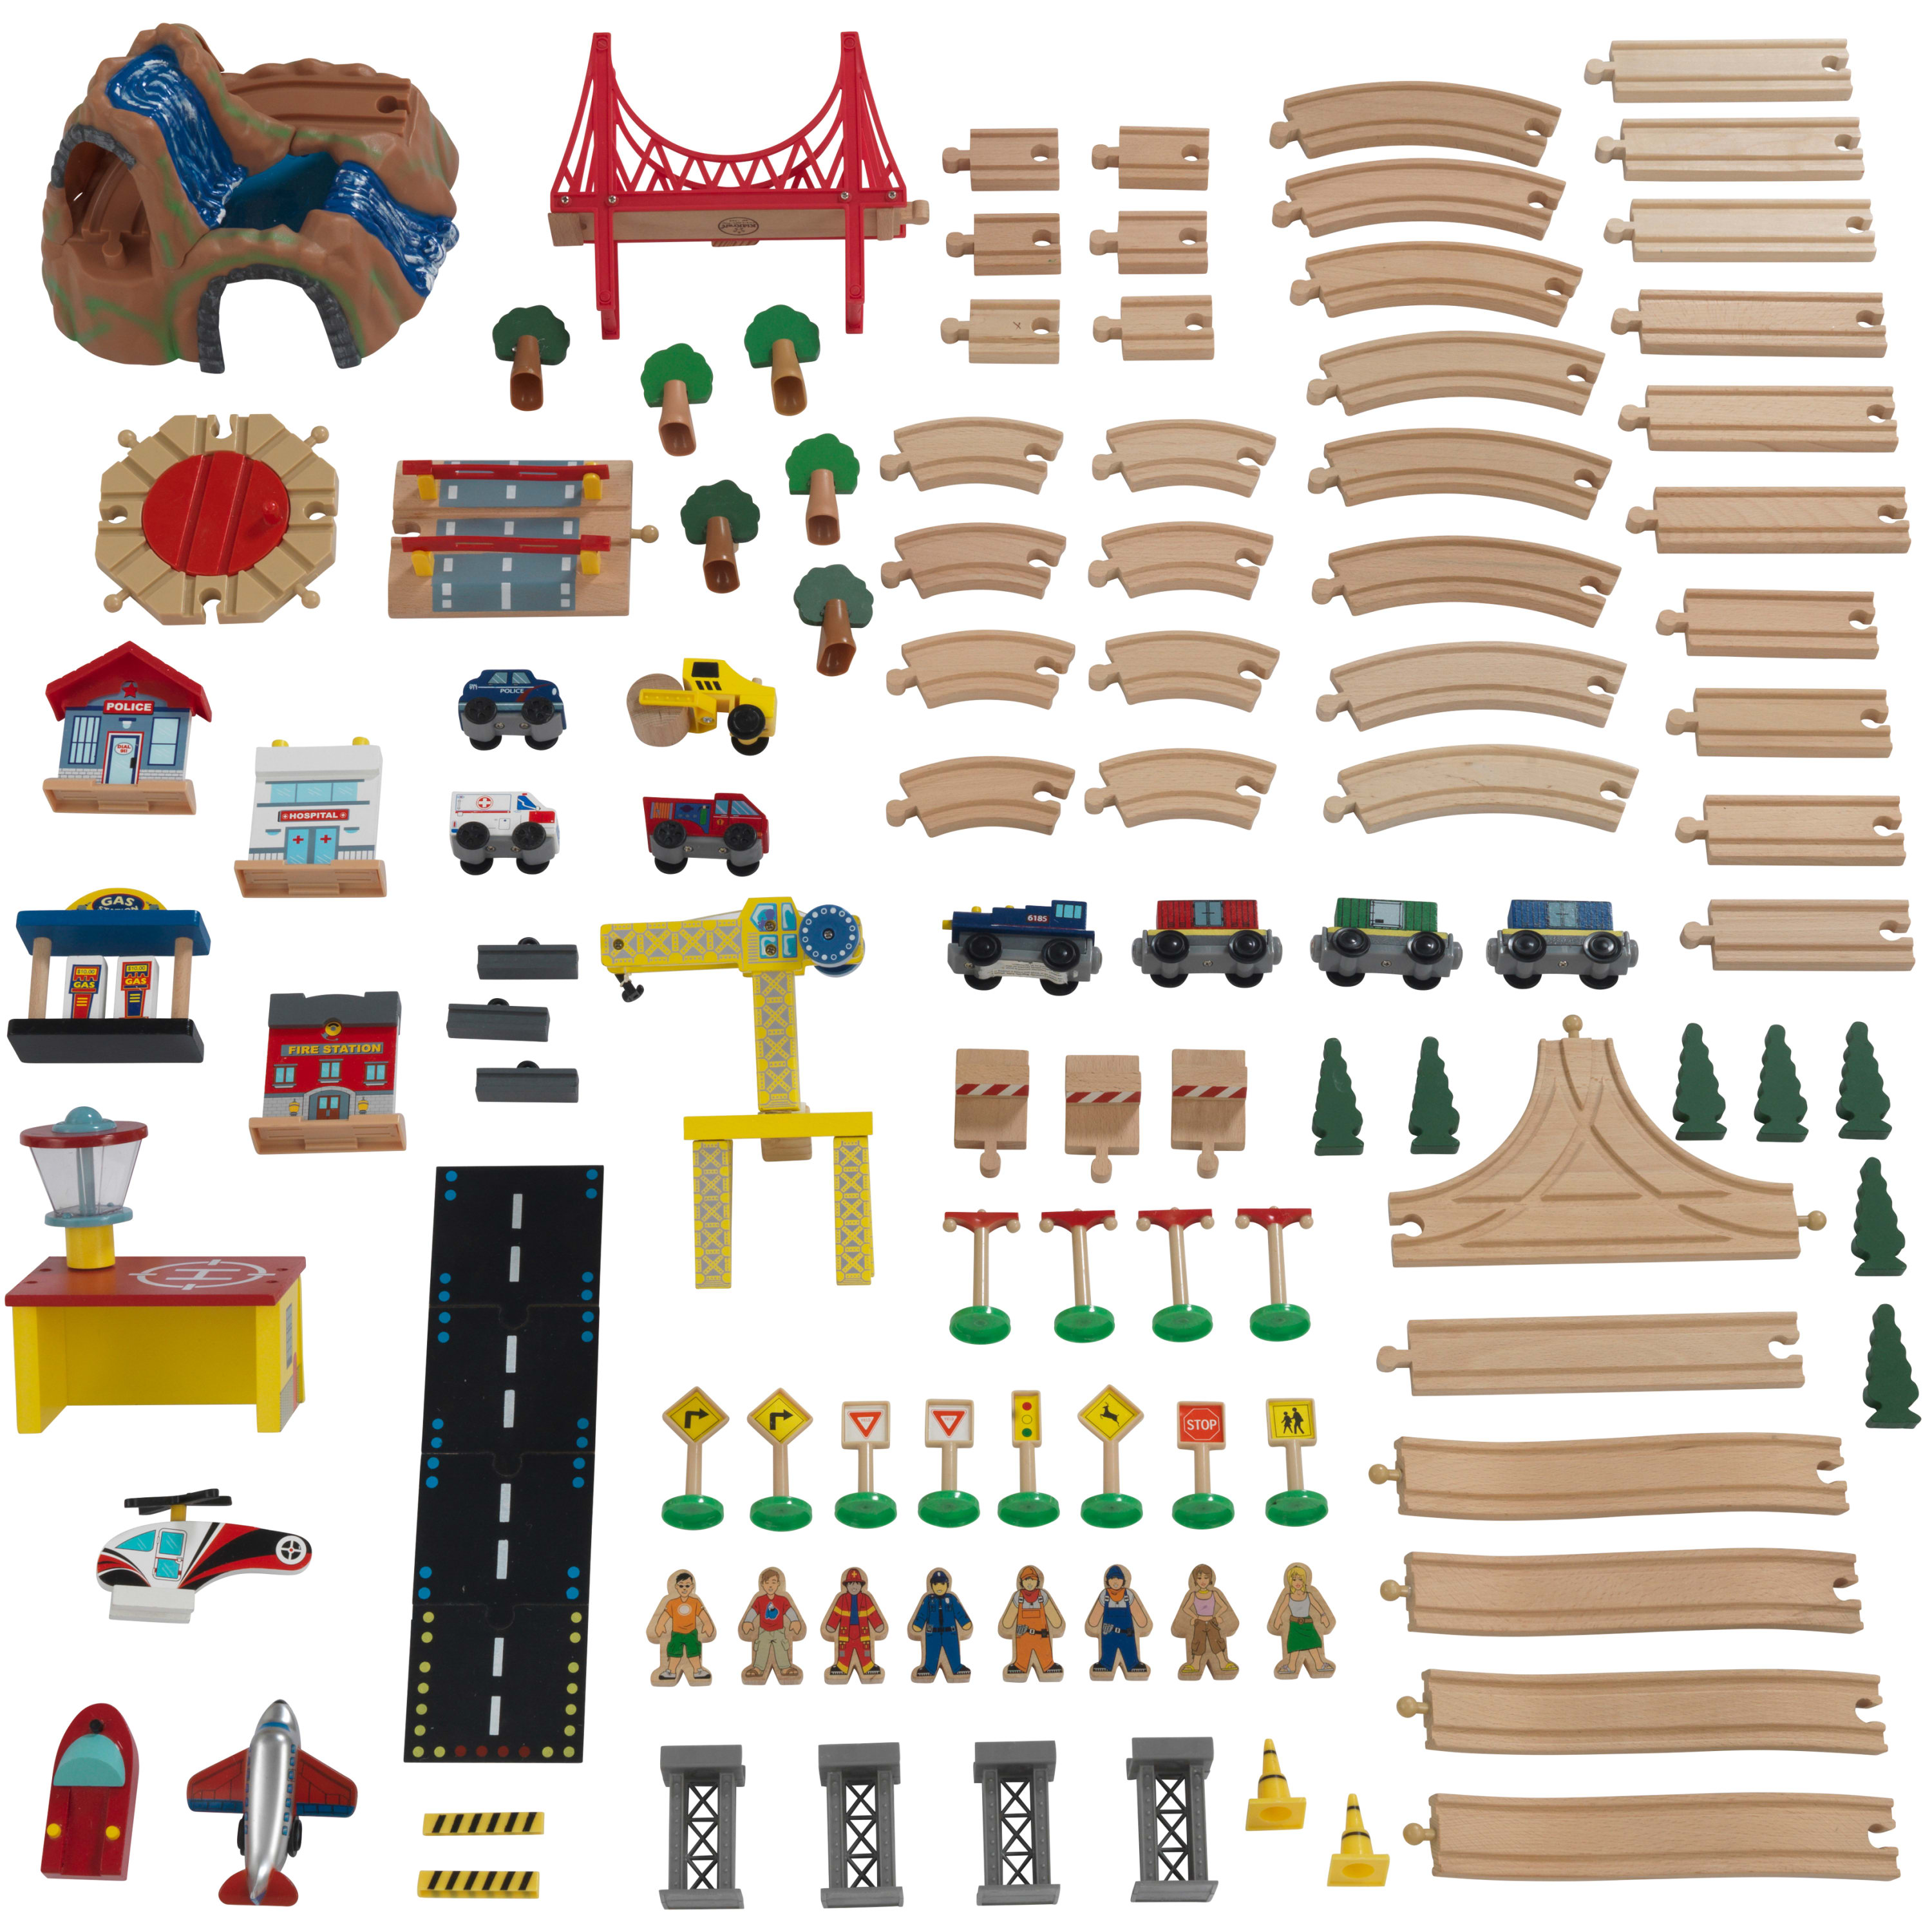 KidKraft Adventure Town Railway Wooden Train Set & Table, 120 Pieces - image 5 of 10